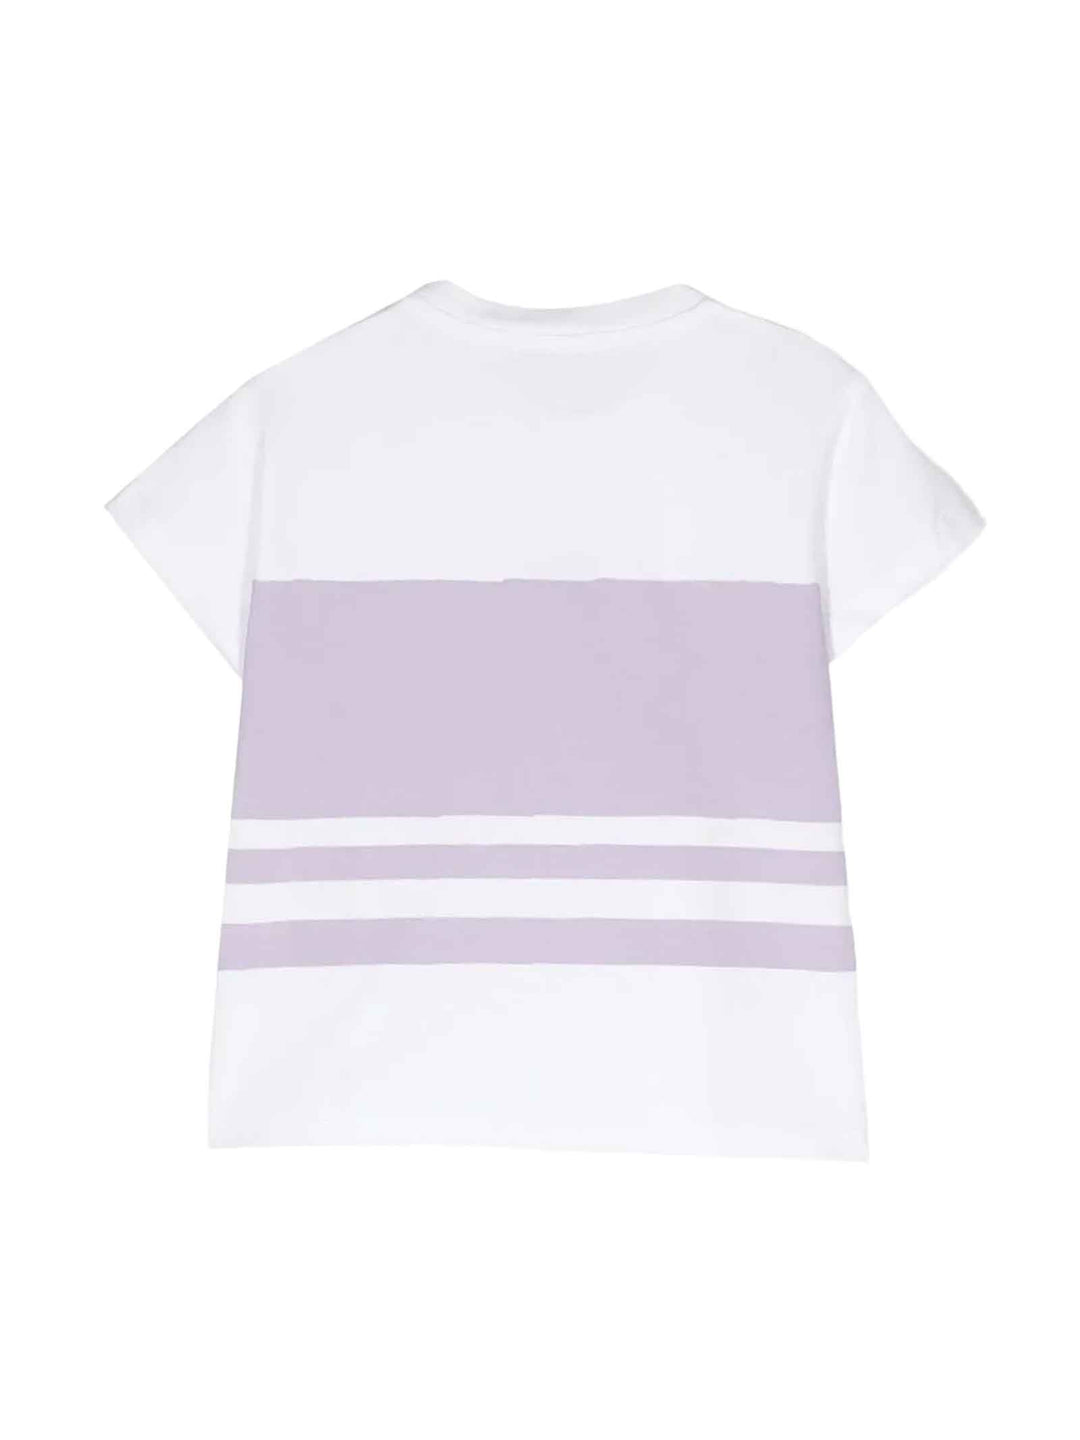 T-shirt bianco/lilla unisex